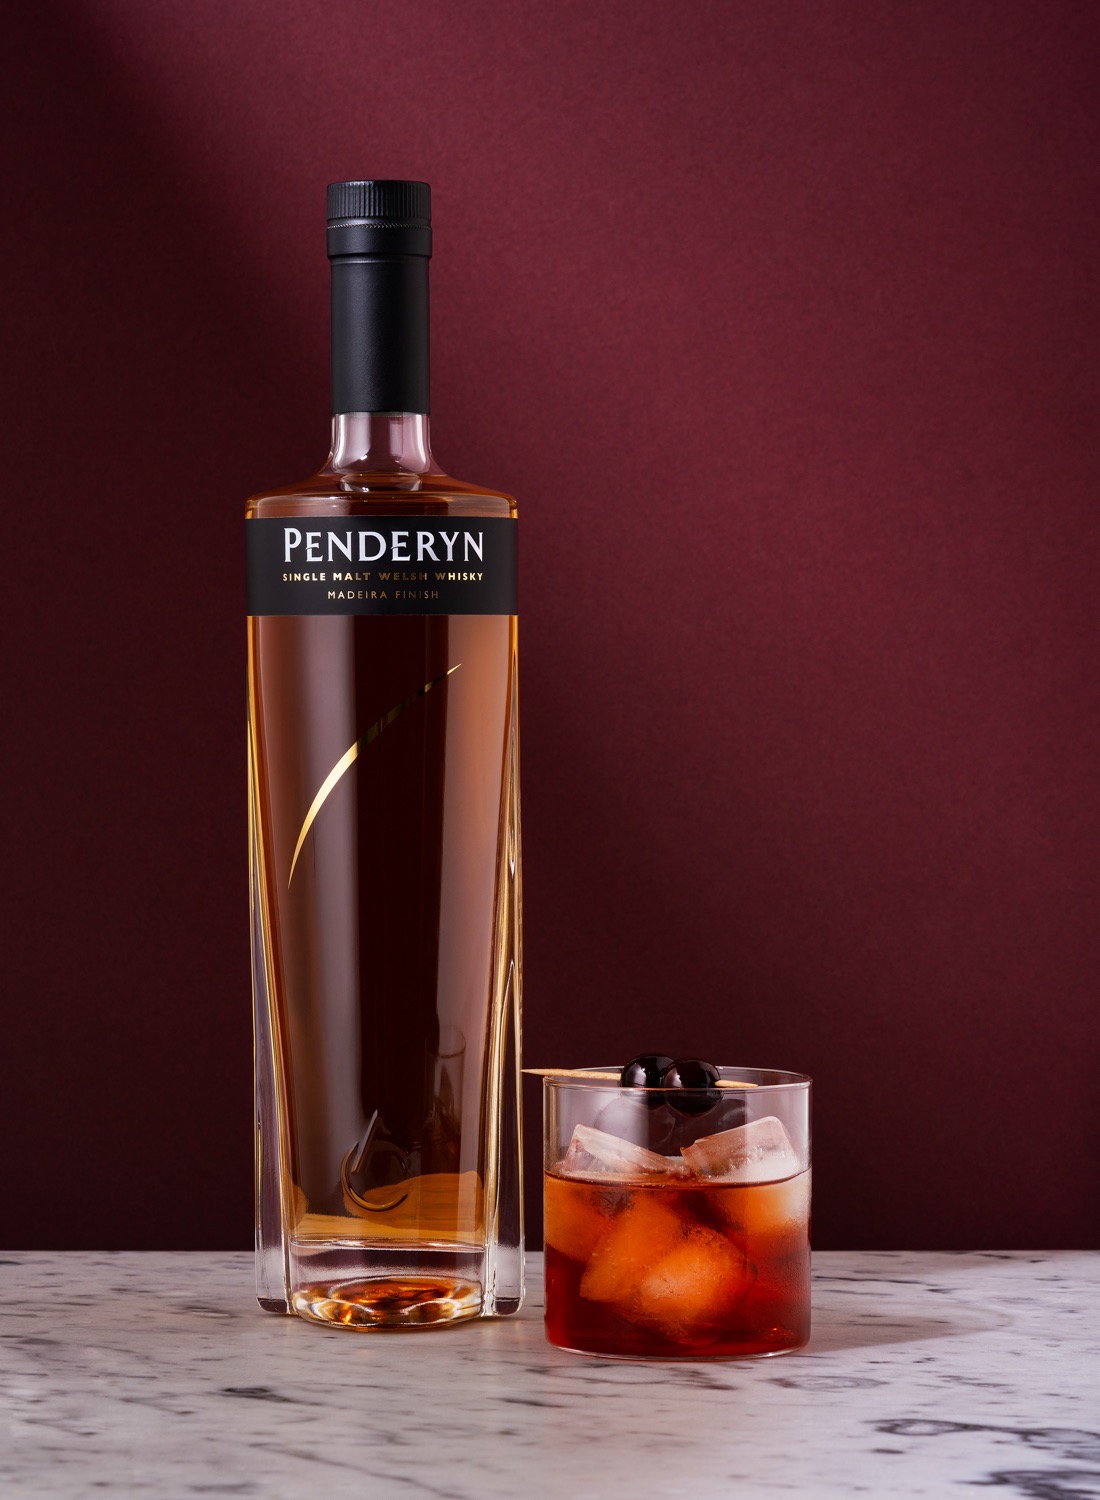 Penderyn Autumn in Aberdare Cocktail with Penderyn Madeira Whisky bottle